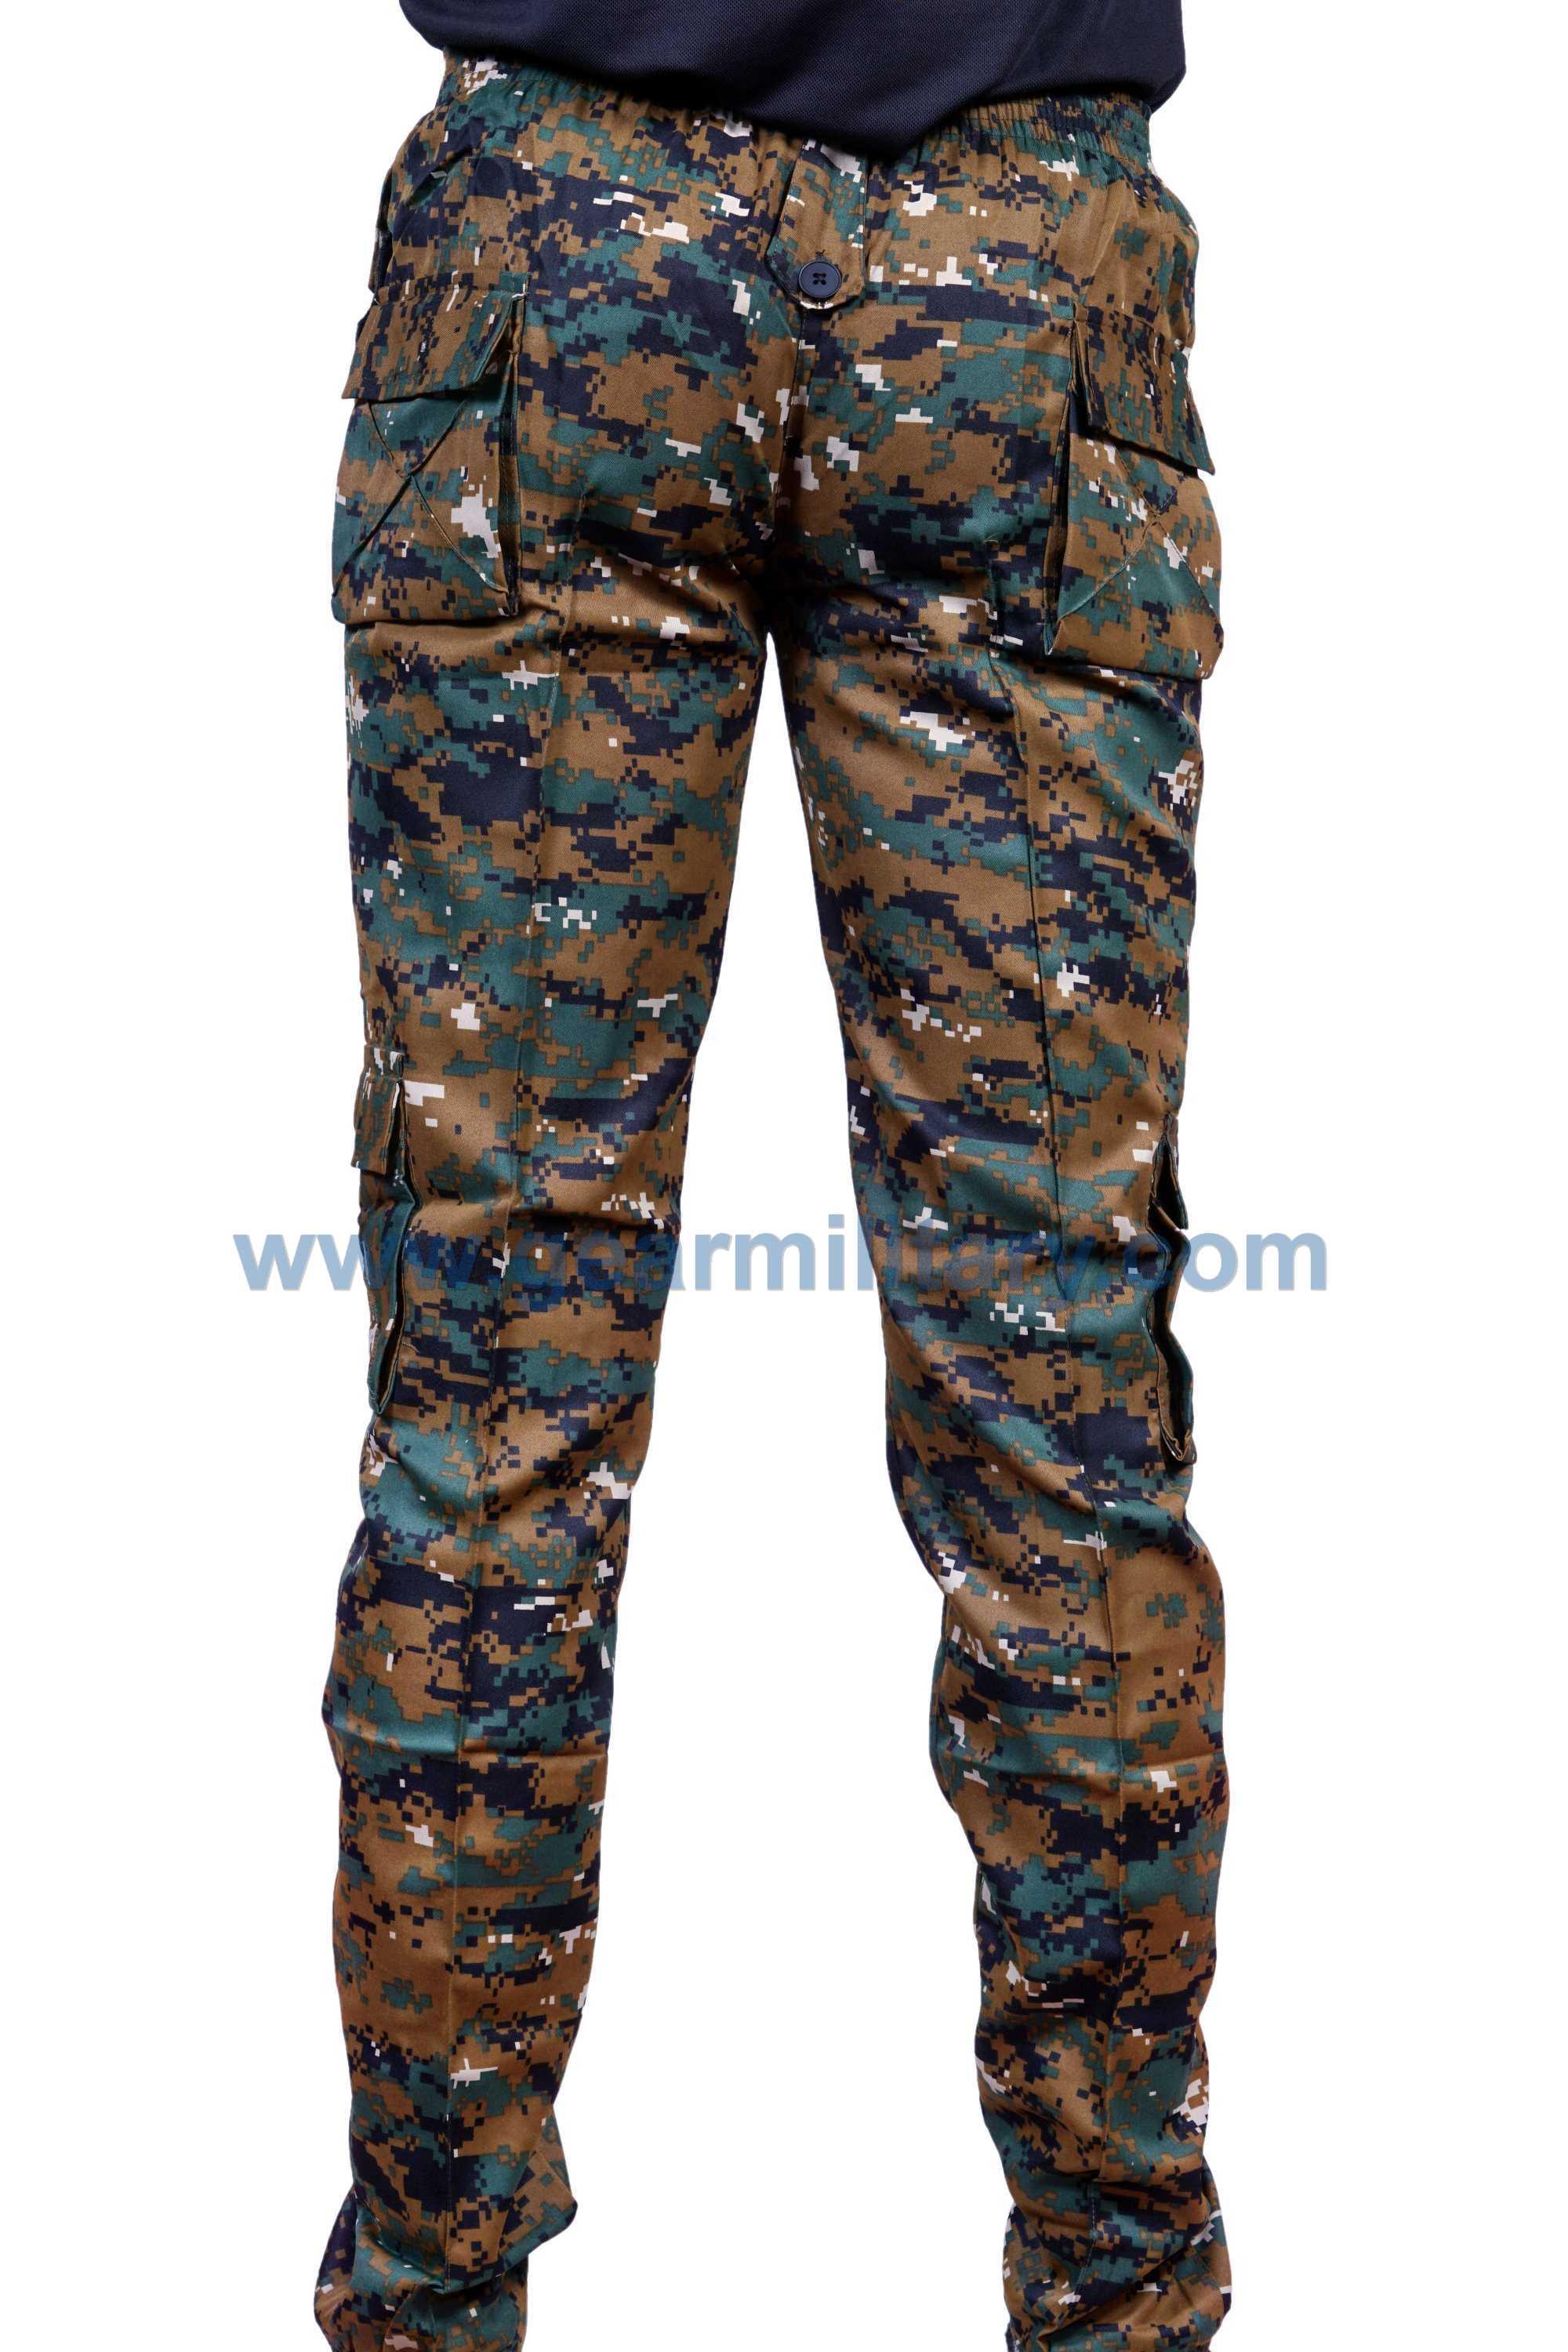 Amazon.com: Bdu Shorts (Woodland Digital Camo, XL): Military Apparel  Shorts: Clothing, Shoes & Jewelry